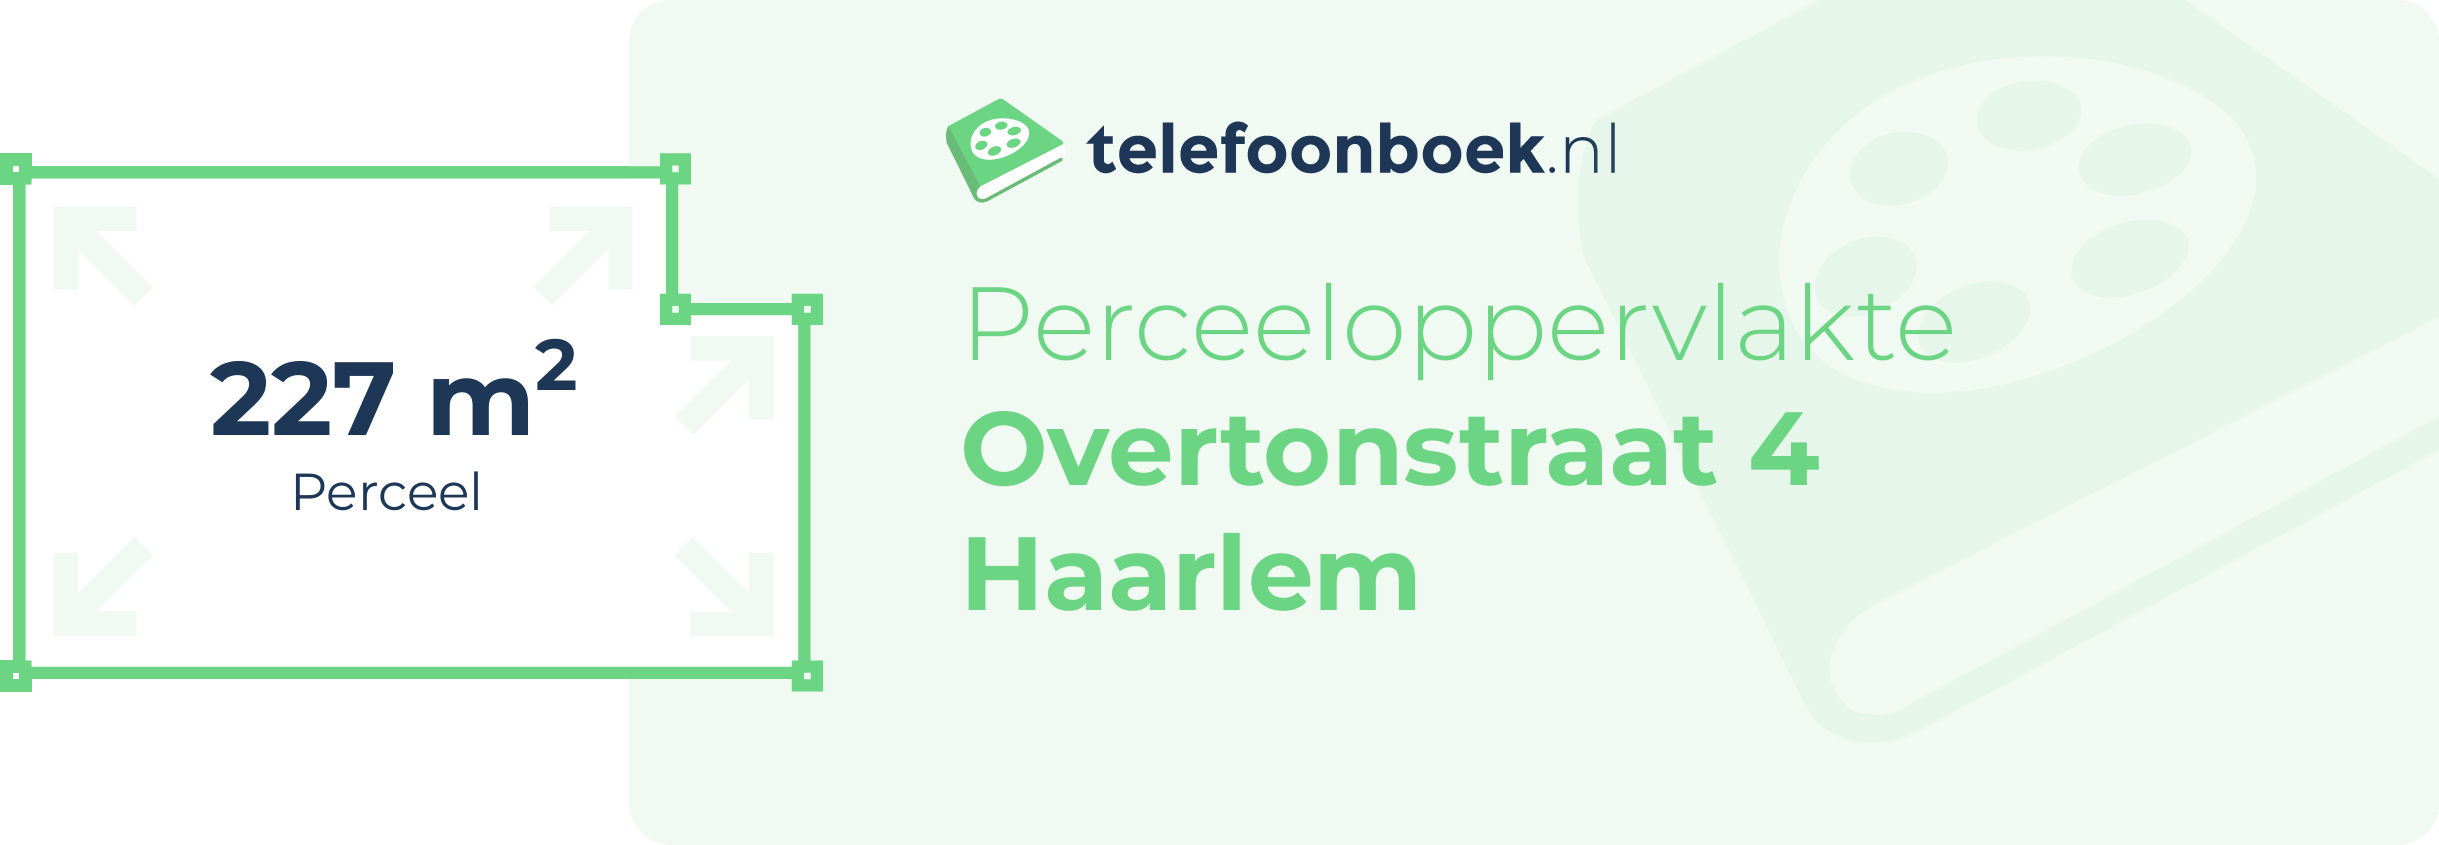 Perceeloppervlakte Overtonstraat 4 Haarlem